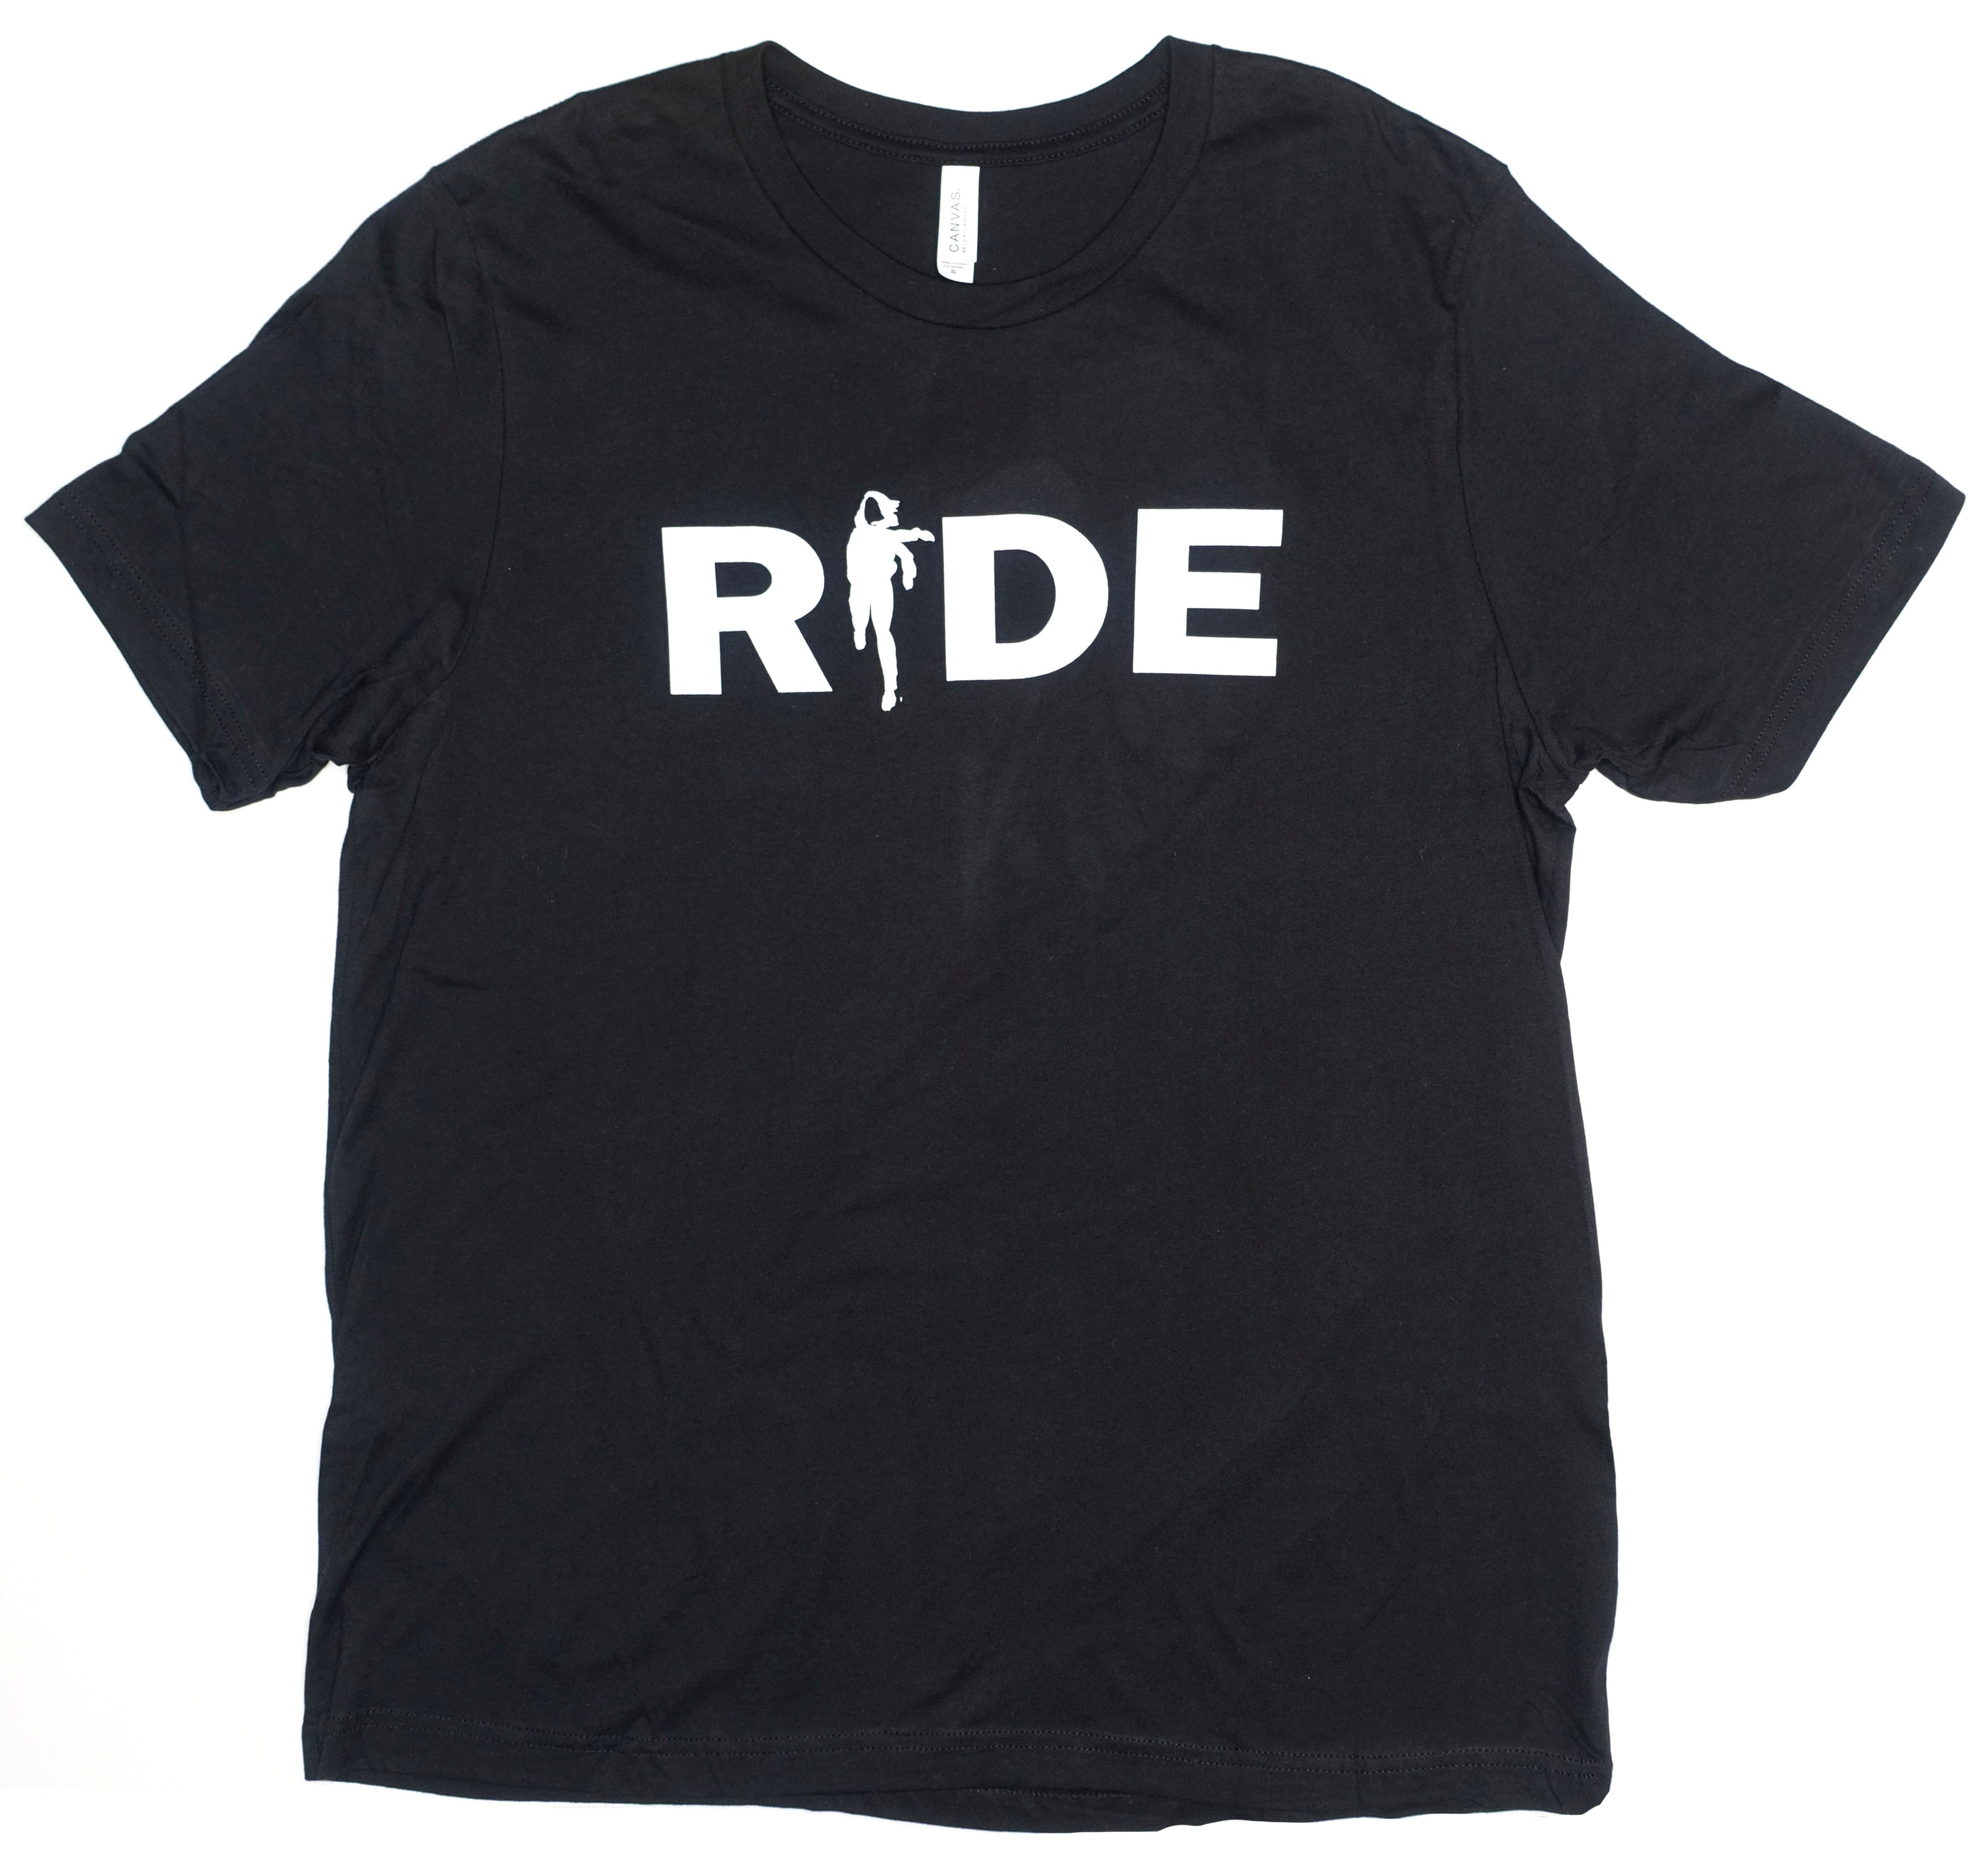 Ride - Weather Diaries 2017 US Tour Shirt Size XL